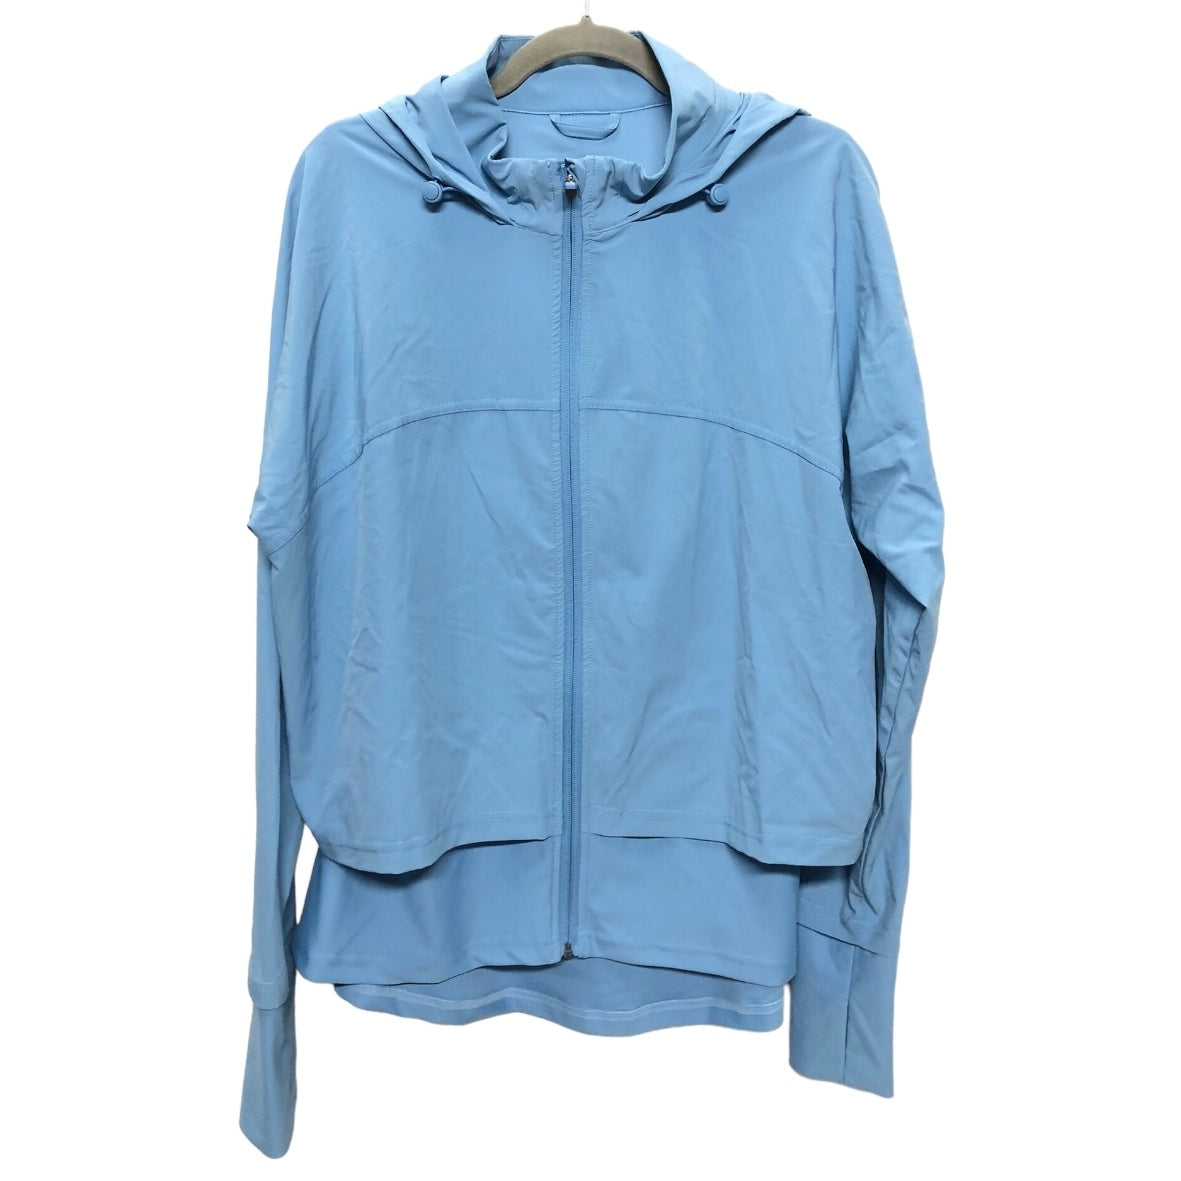 Blue Jacket Windbreaker Antonio Melani, Size L